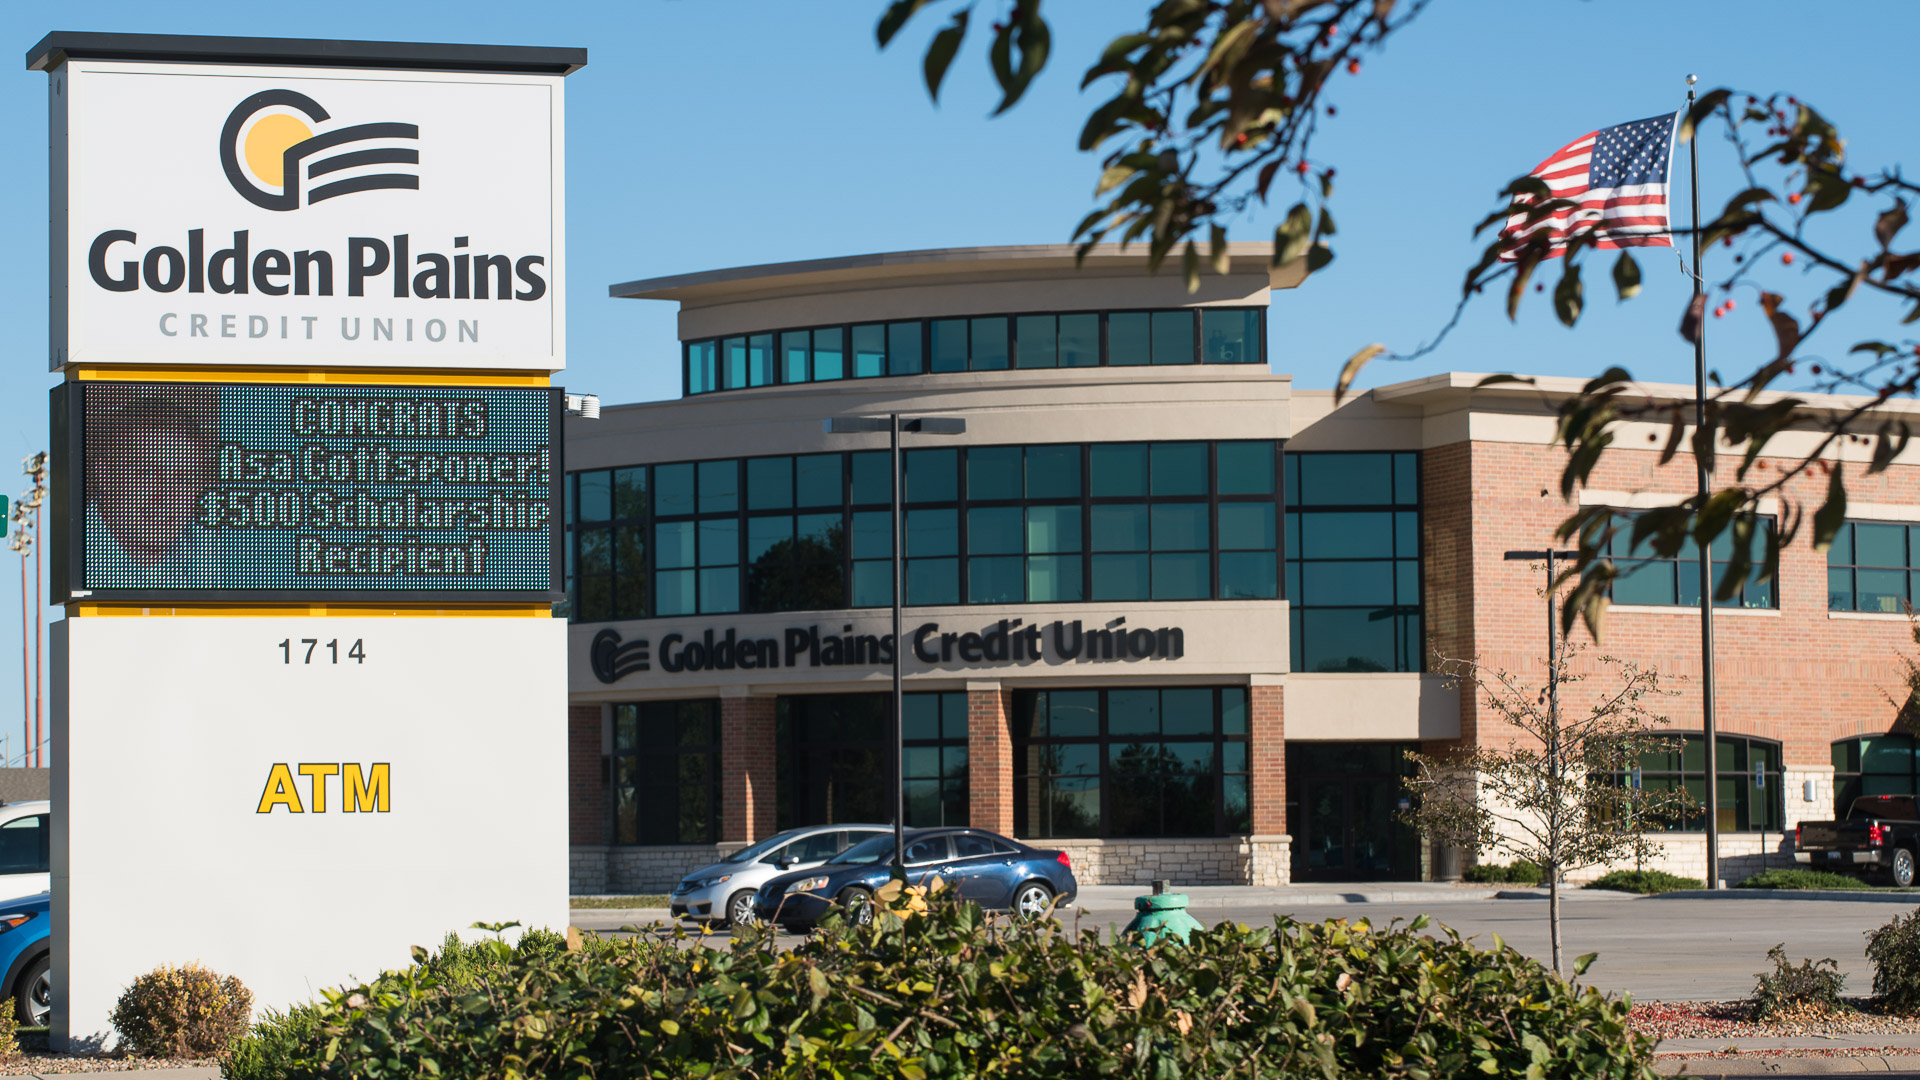 Golden Plains Credit Union In Garden City Ks - Luminous Neon Art Sign Systems Kansas And Missouri Sign Company